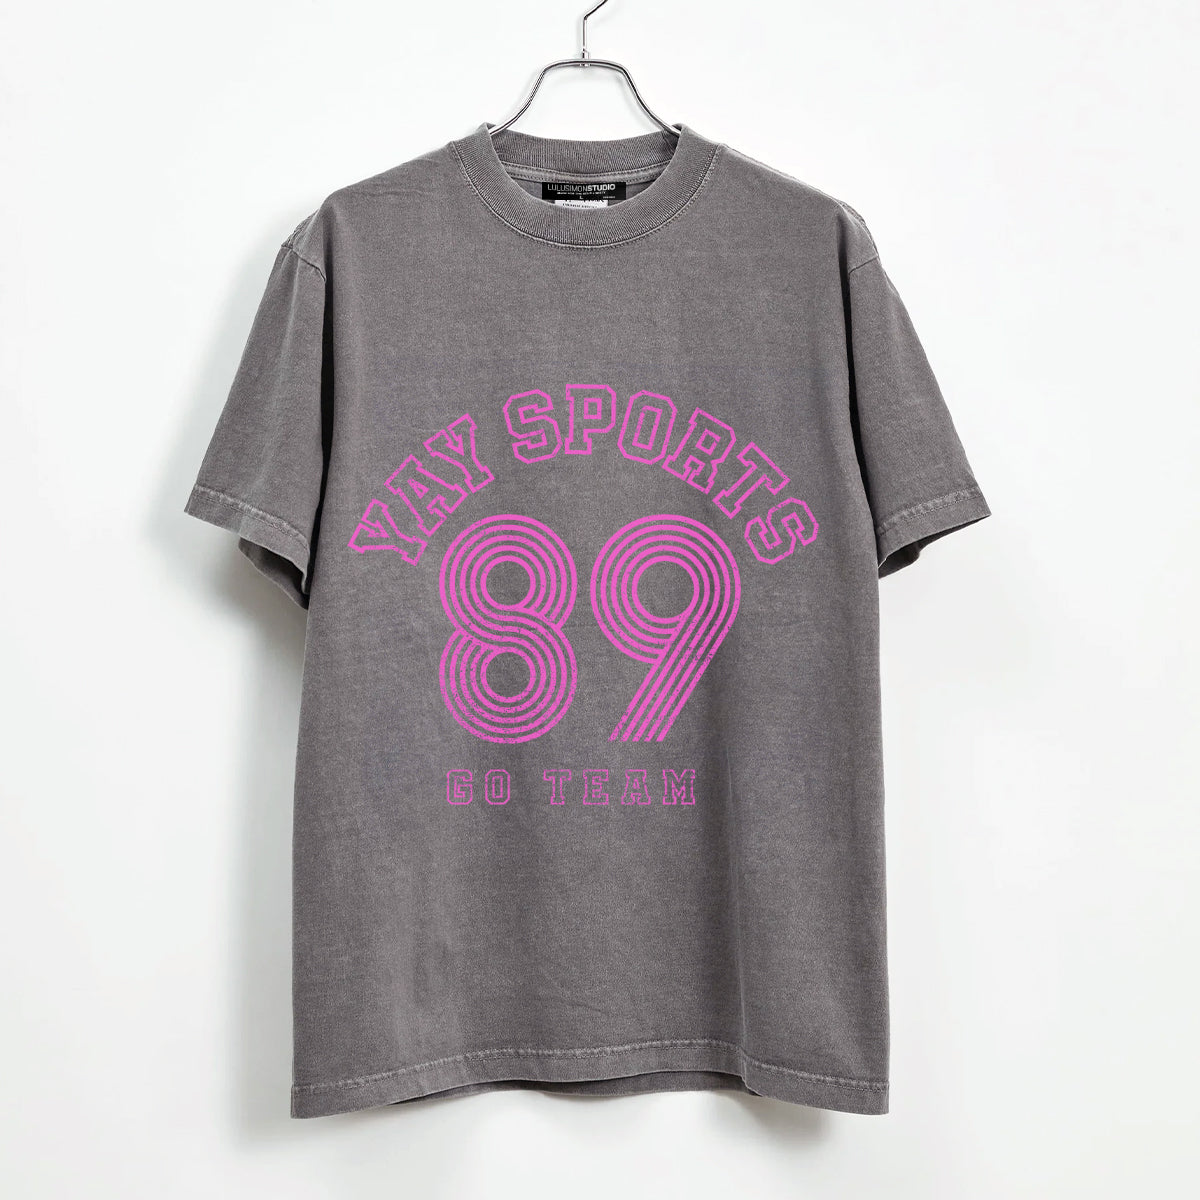 Yay Sports 89 Garment Dye Tee